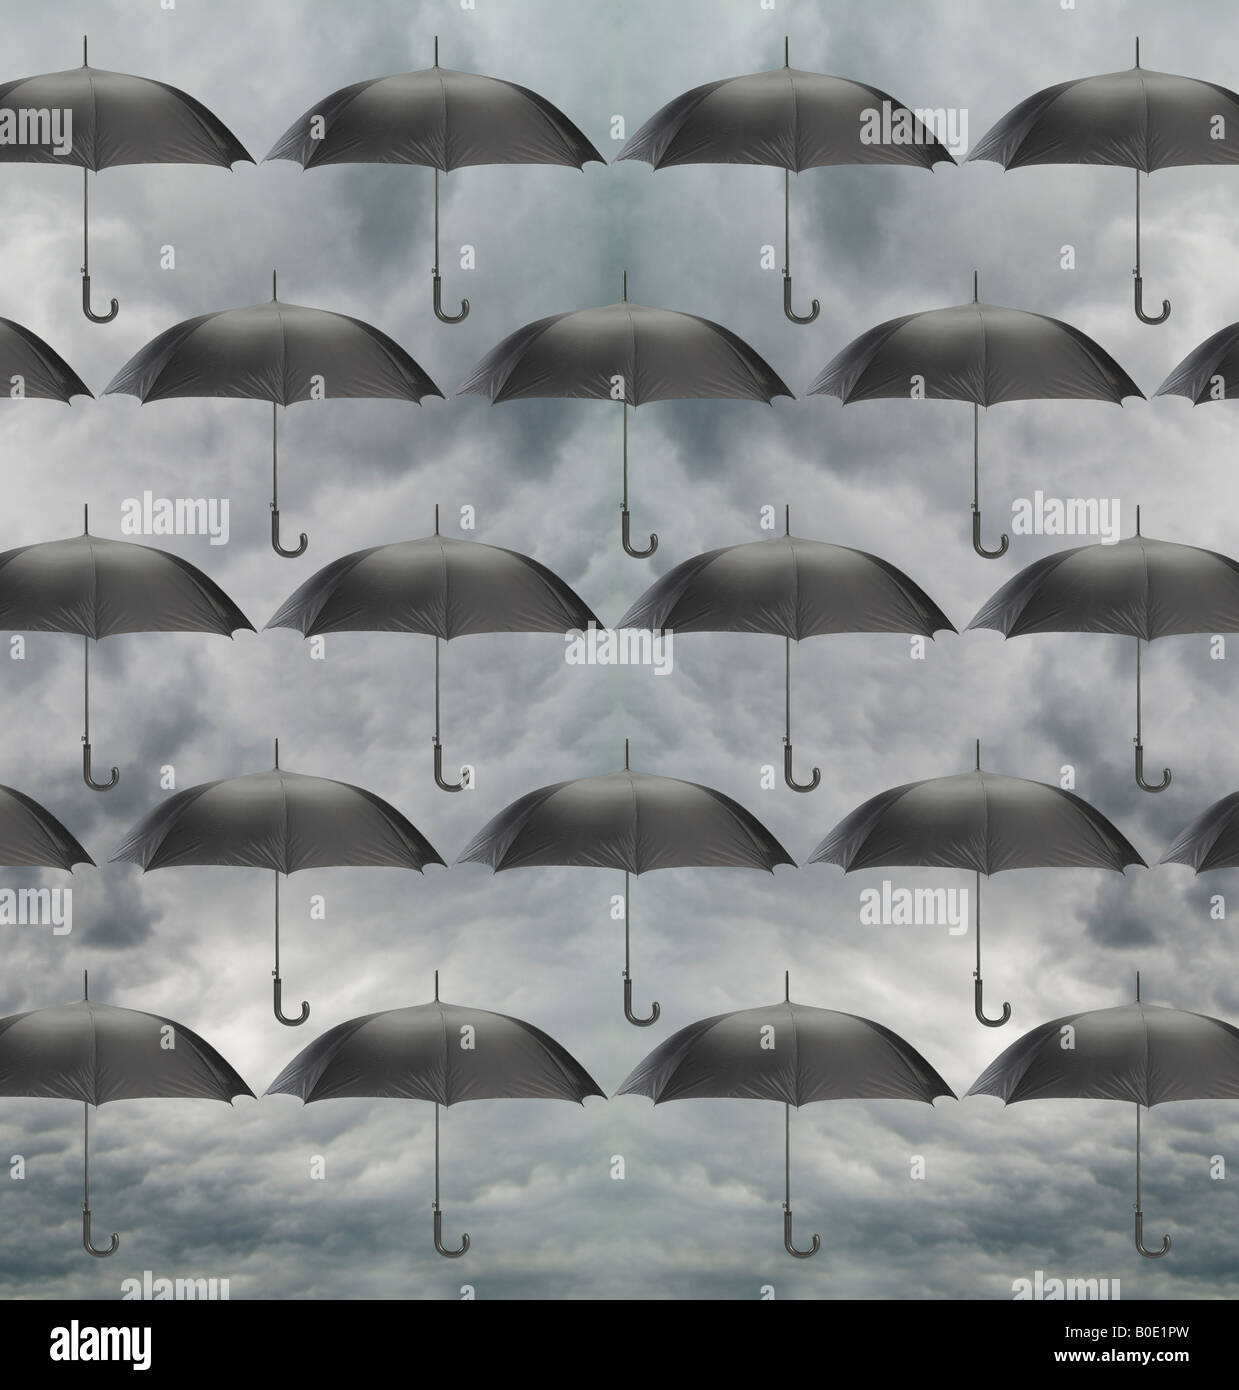 Rows Patterns Of Umbrellas With Dark Stormy Sky Stock Photo